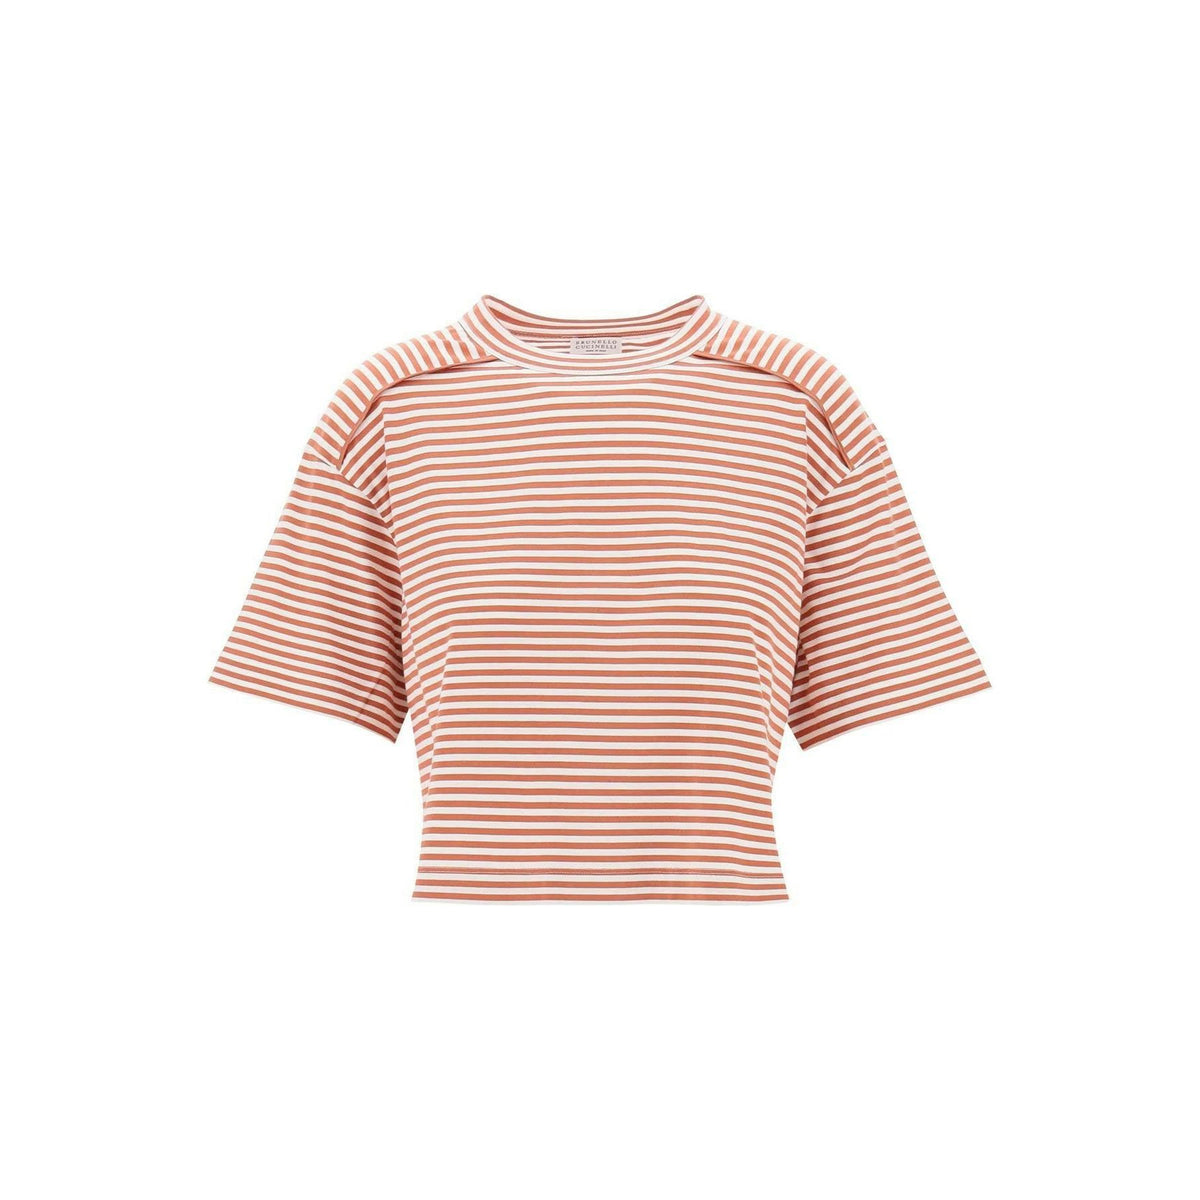 Monili-Trimmed Orange and White Striped Cotton Jersey T-Shirt BRUNELLO CUCINELLI JOHN JULIA.